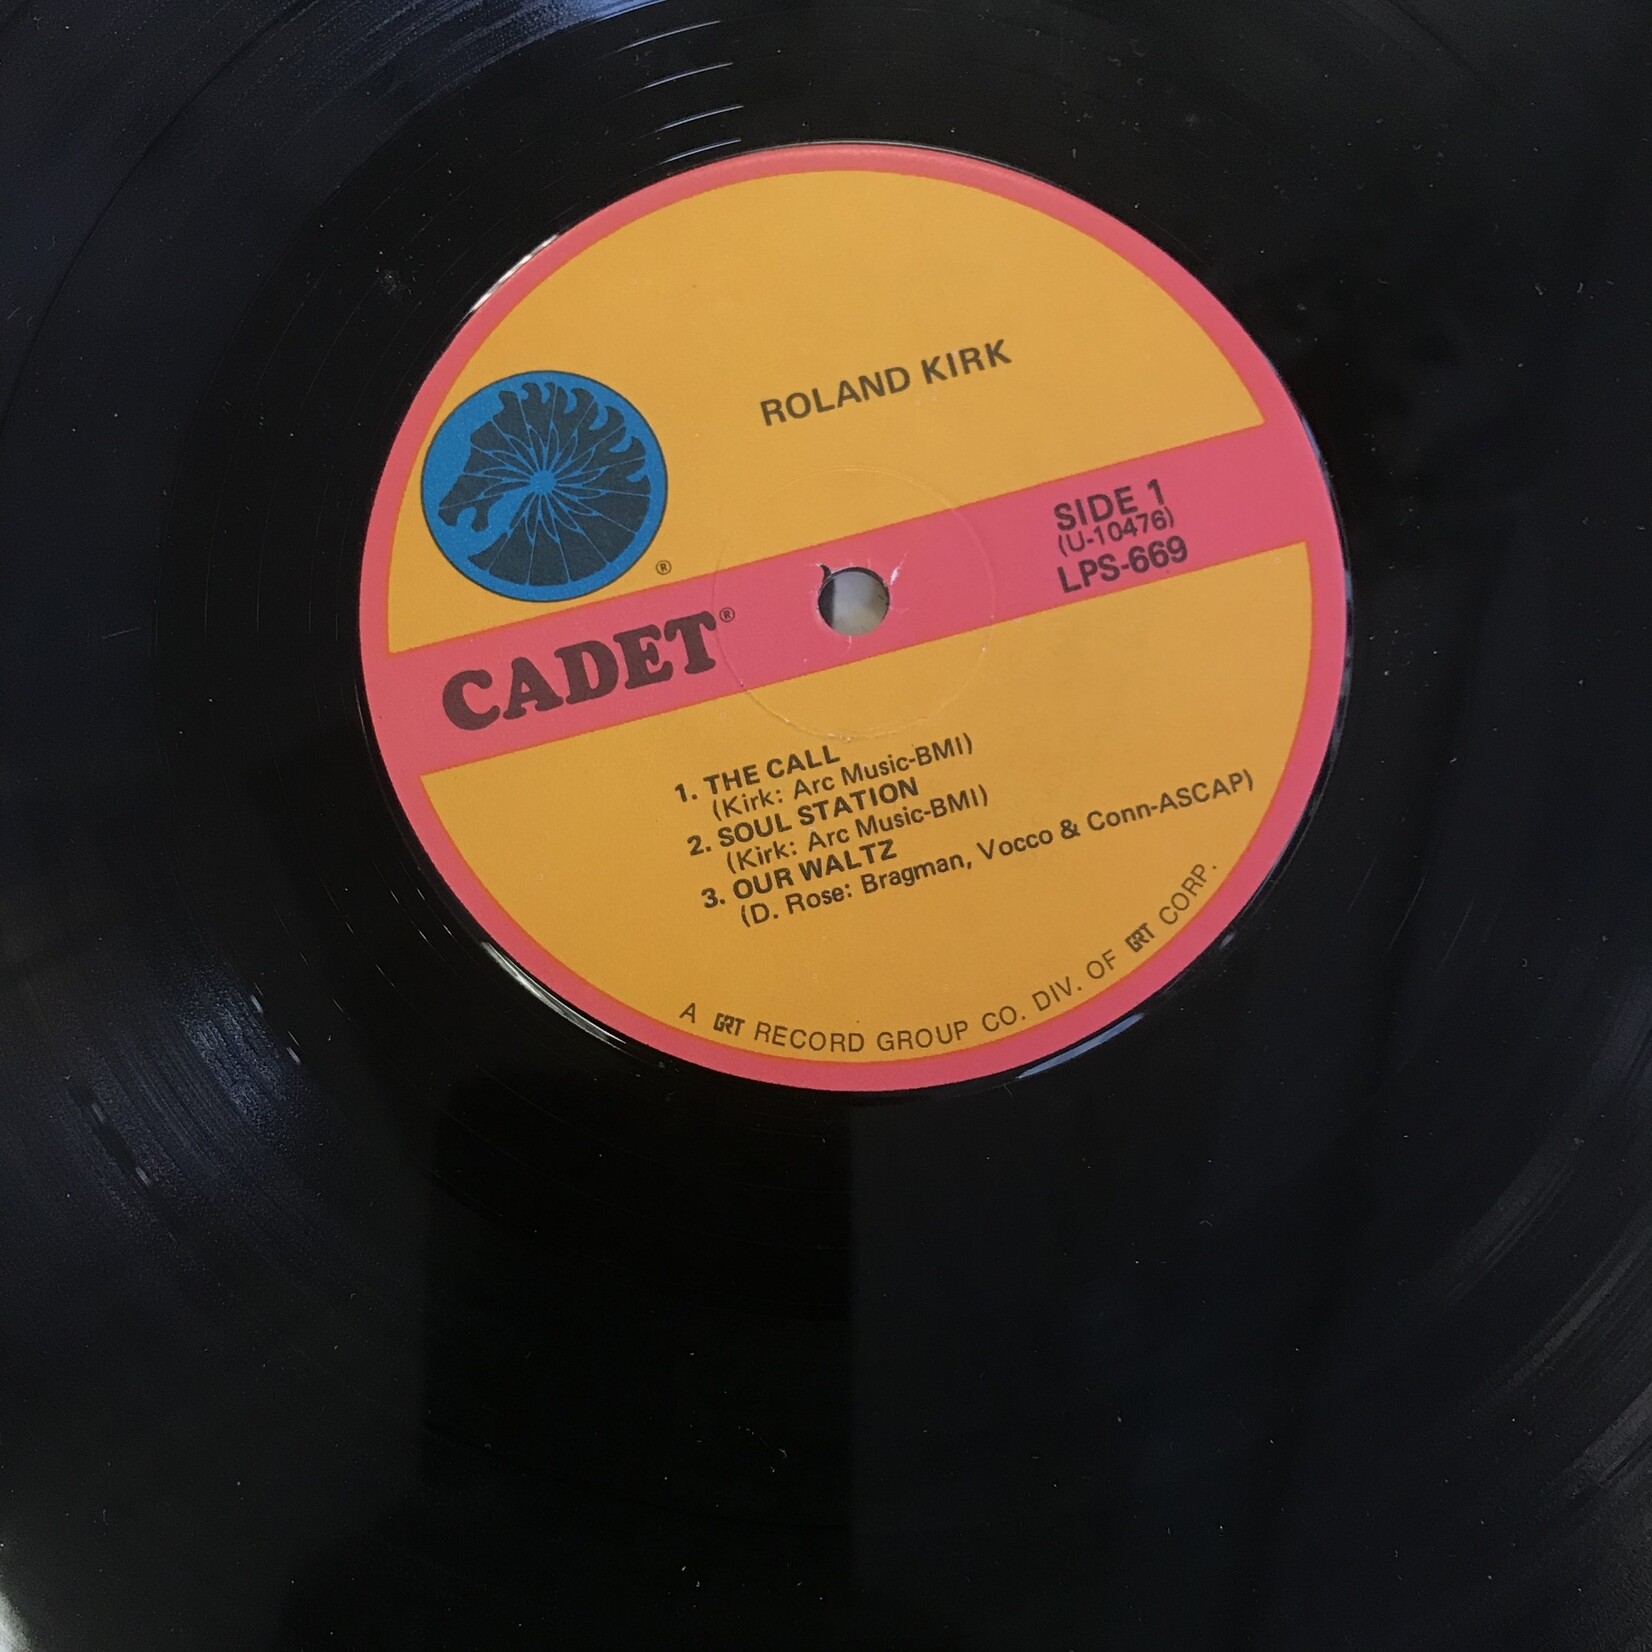 Roland Kirk - Introducing Roland Kirk - LPS669 - Vinyl LP (USED)